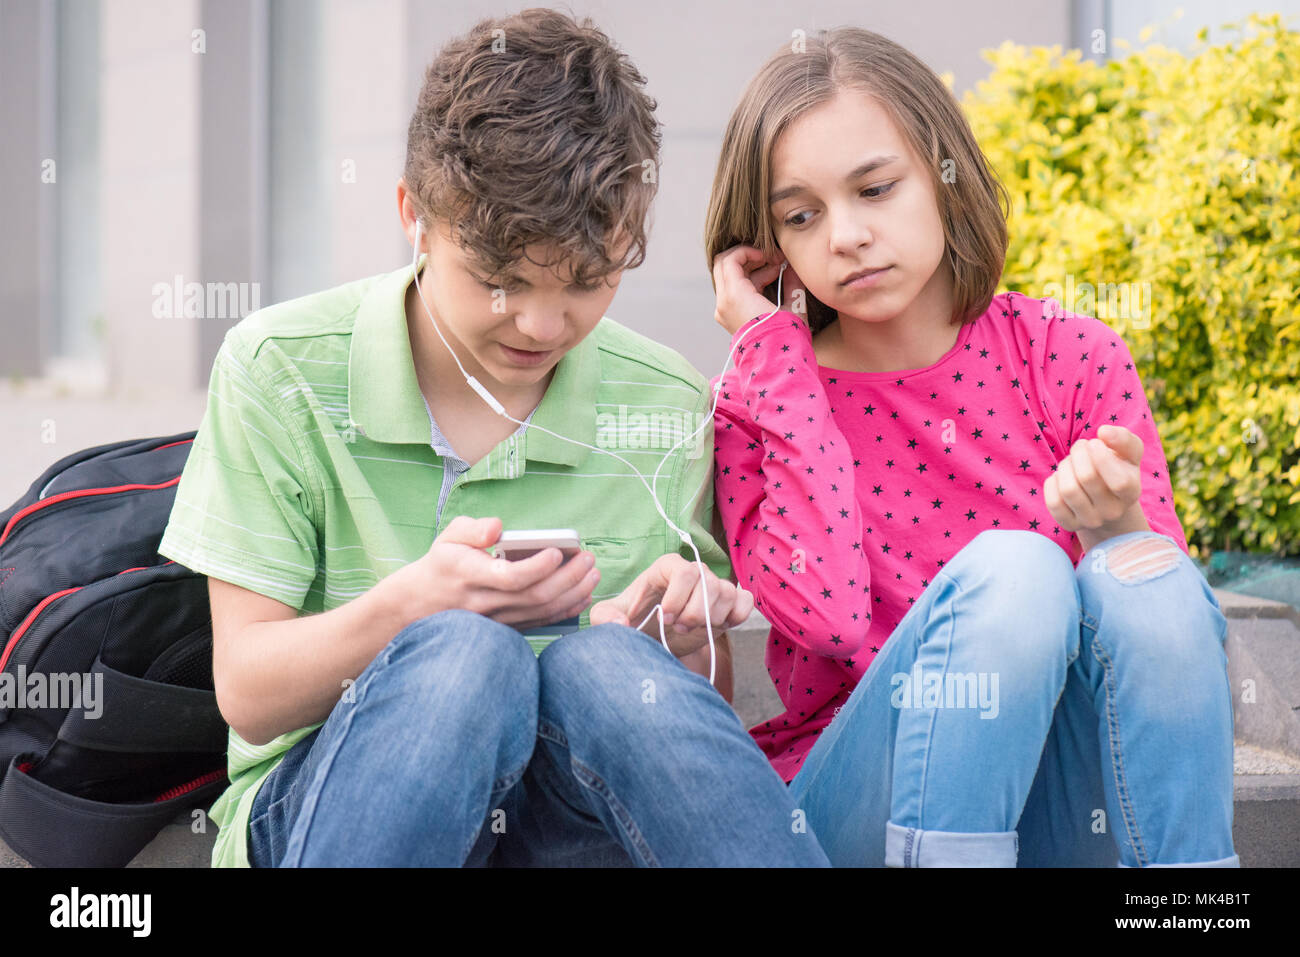 Teen boy and girl with headphones Stock Photo